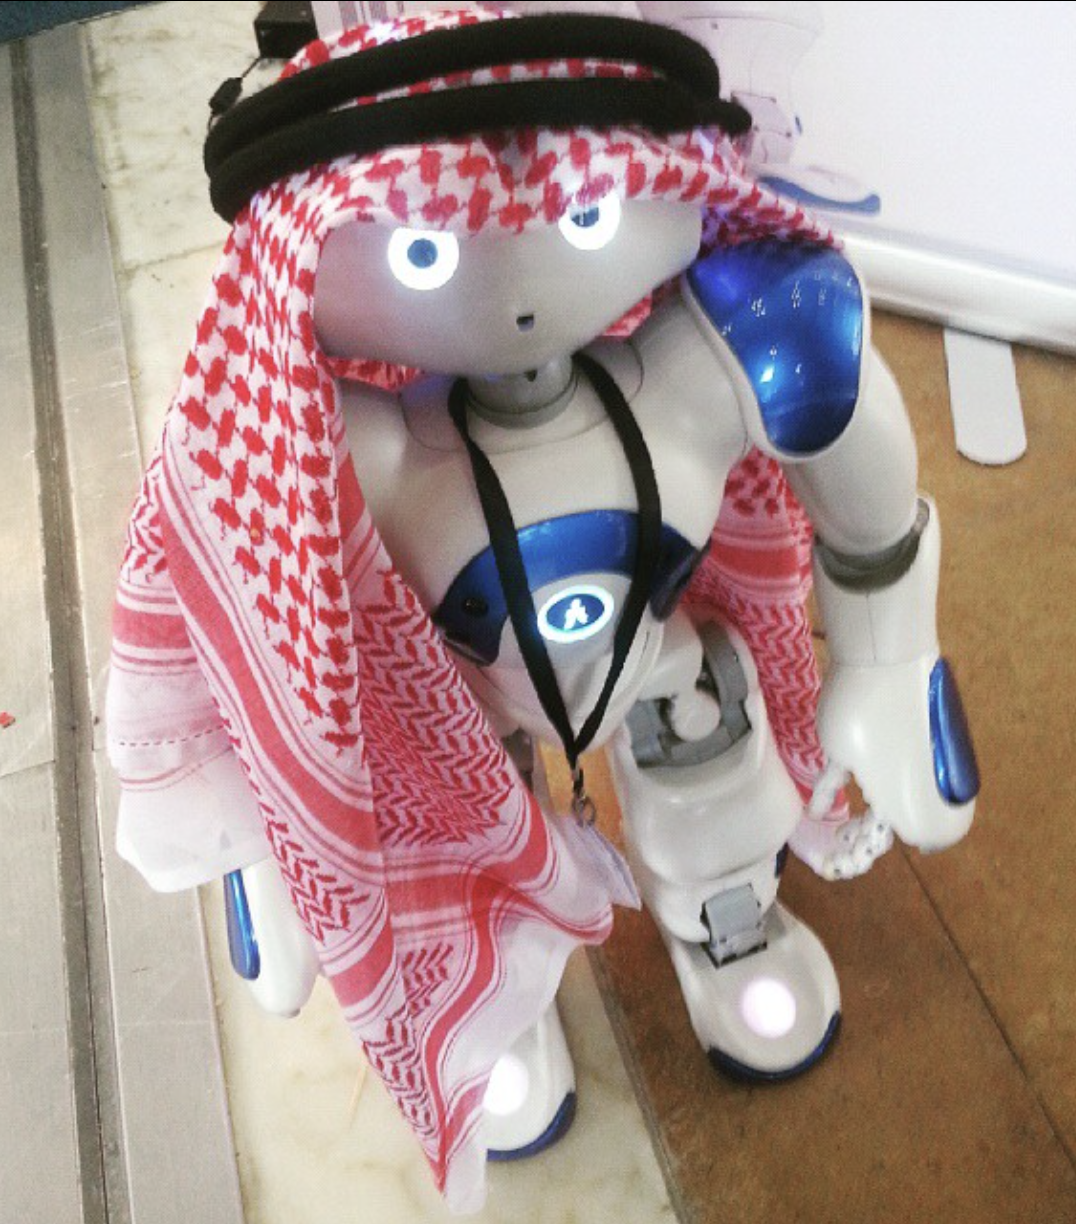 Mr. Saud: NAO Robot for Kindergarten